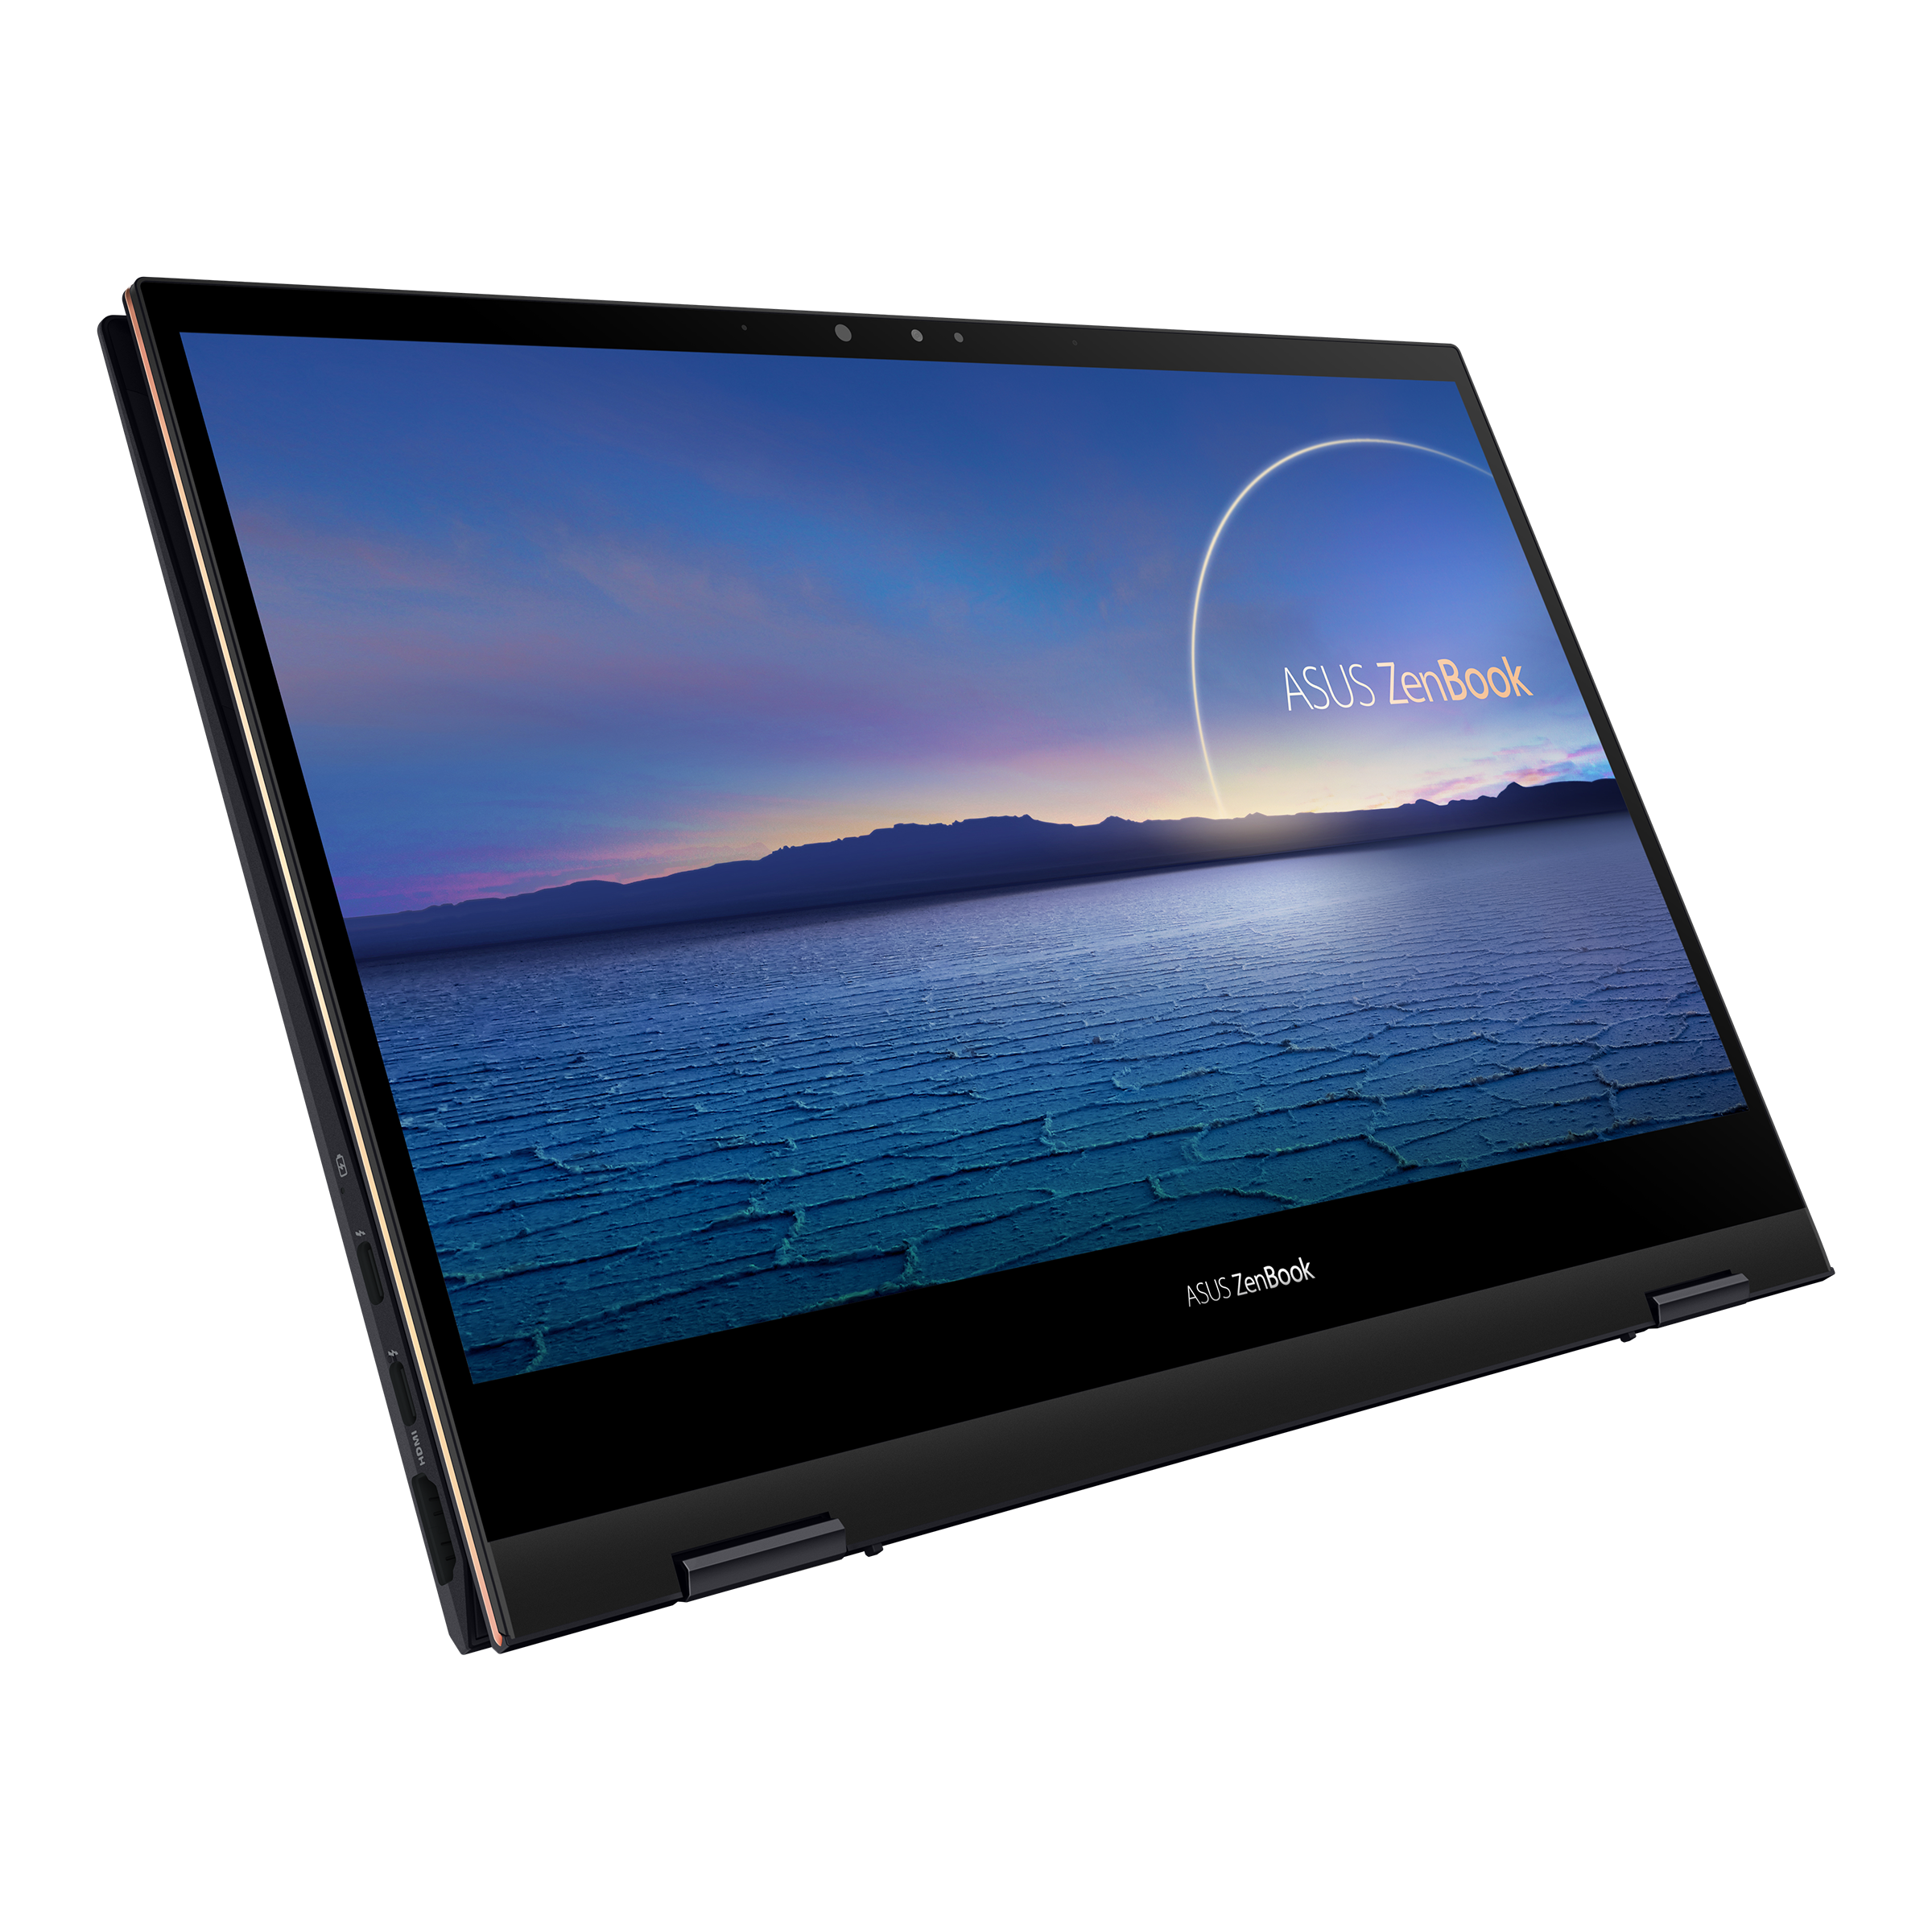 Asus Zenbook Flip S13 UX371EA-HL910WS - Laptop Tiangge